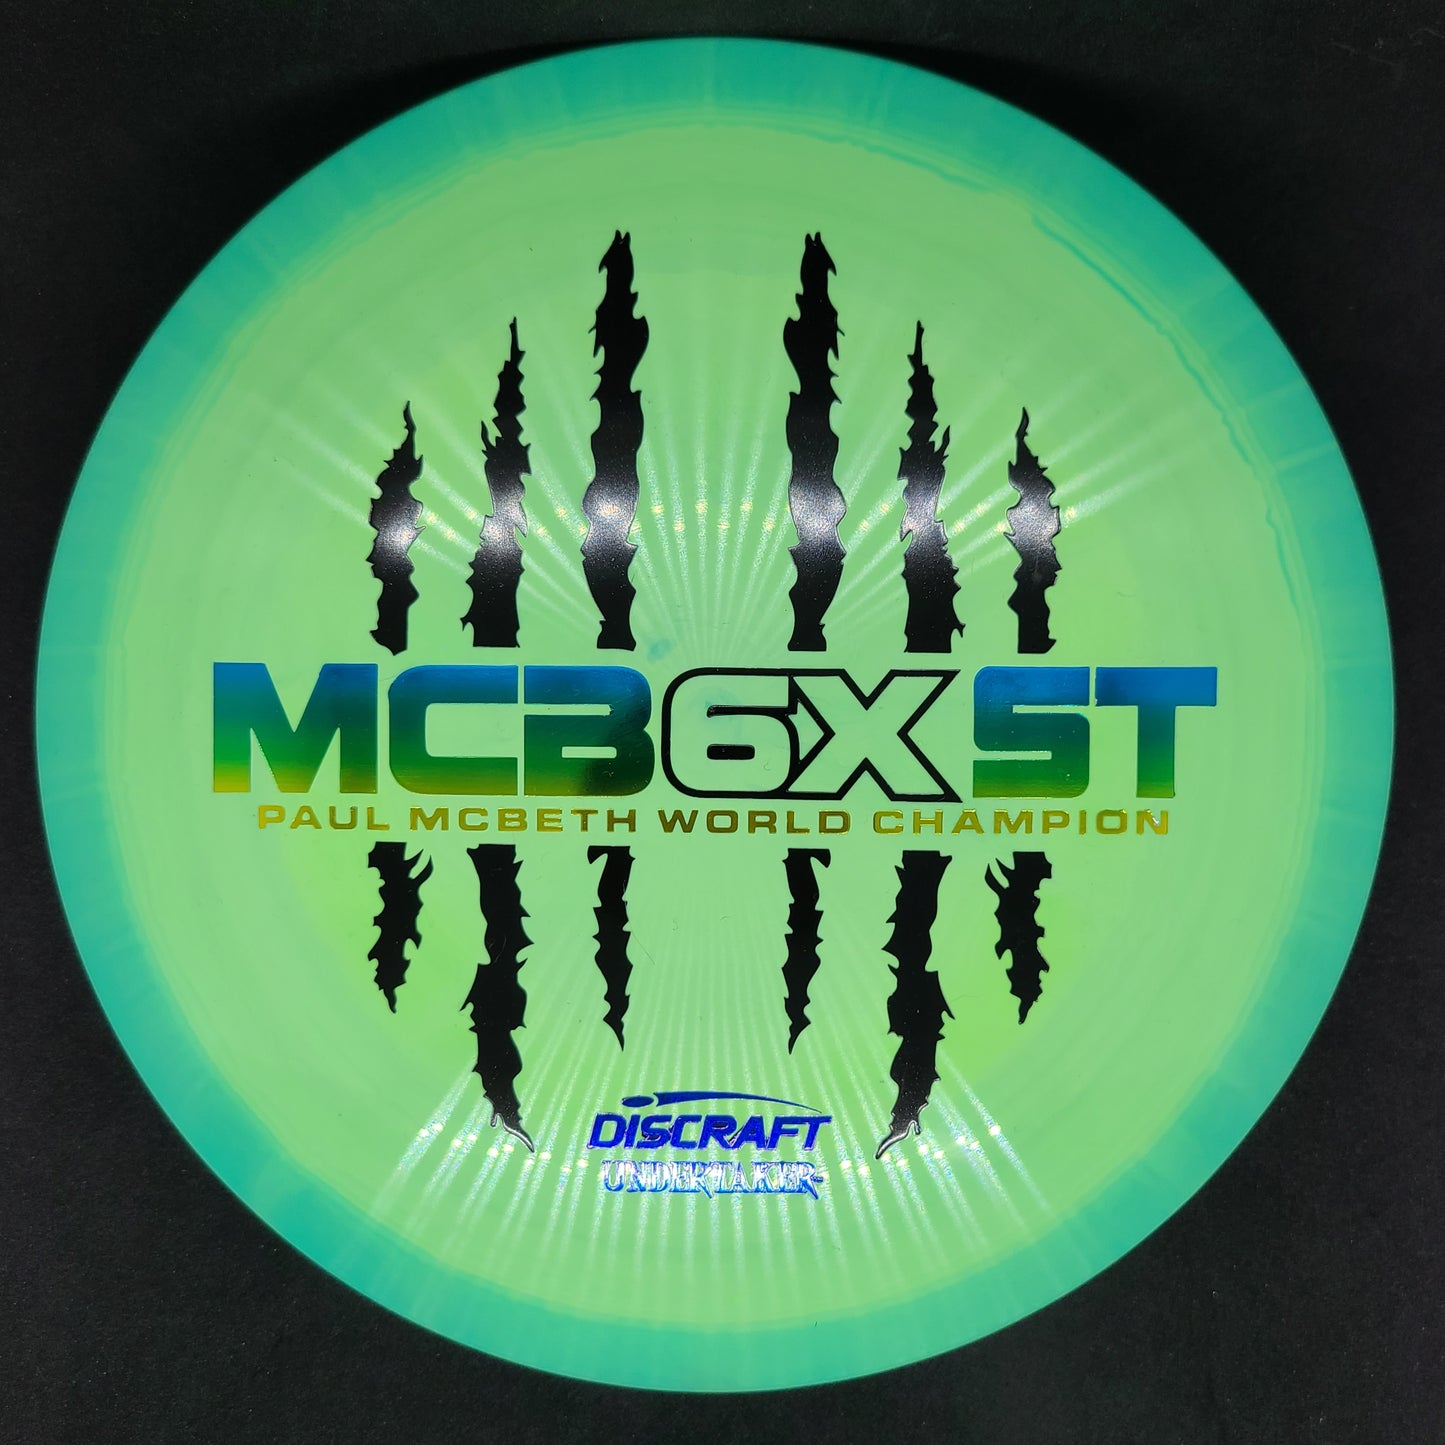 Discraft - Undertaker - ESP * 6X McBeast